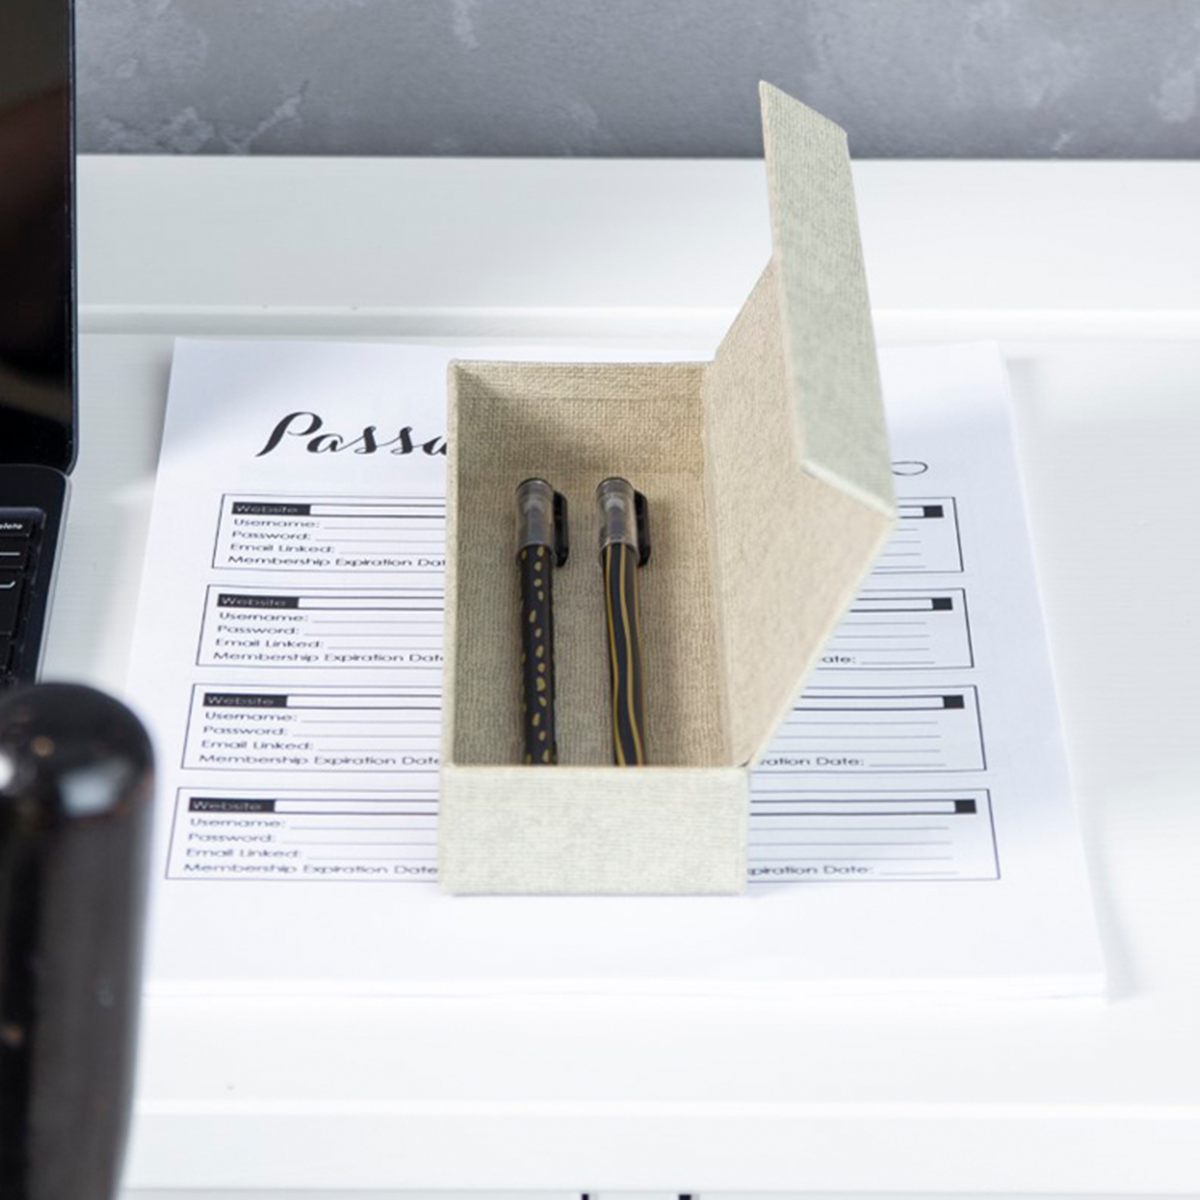 Astrid Pen Box Linen in the group Pens / Pen Accessories / Pencil Cases at Pen Store (127318)